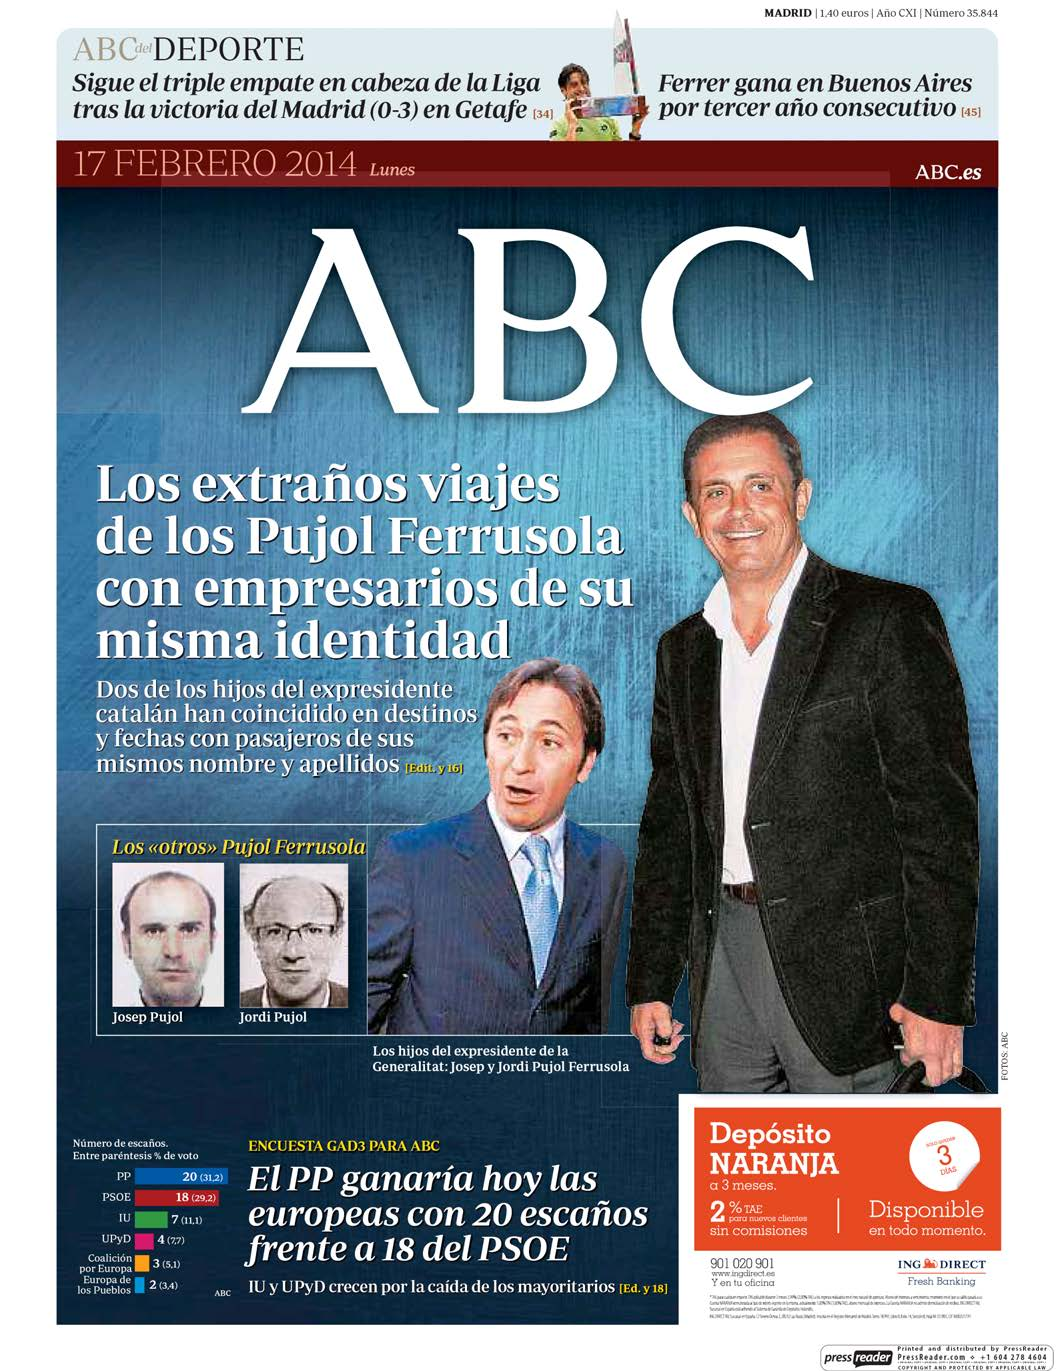 17/2/2014 Kiosko y Más - ABC (Madrid) - 17 feb. 2014 - Page #1 http://lector.kioskoymas.